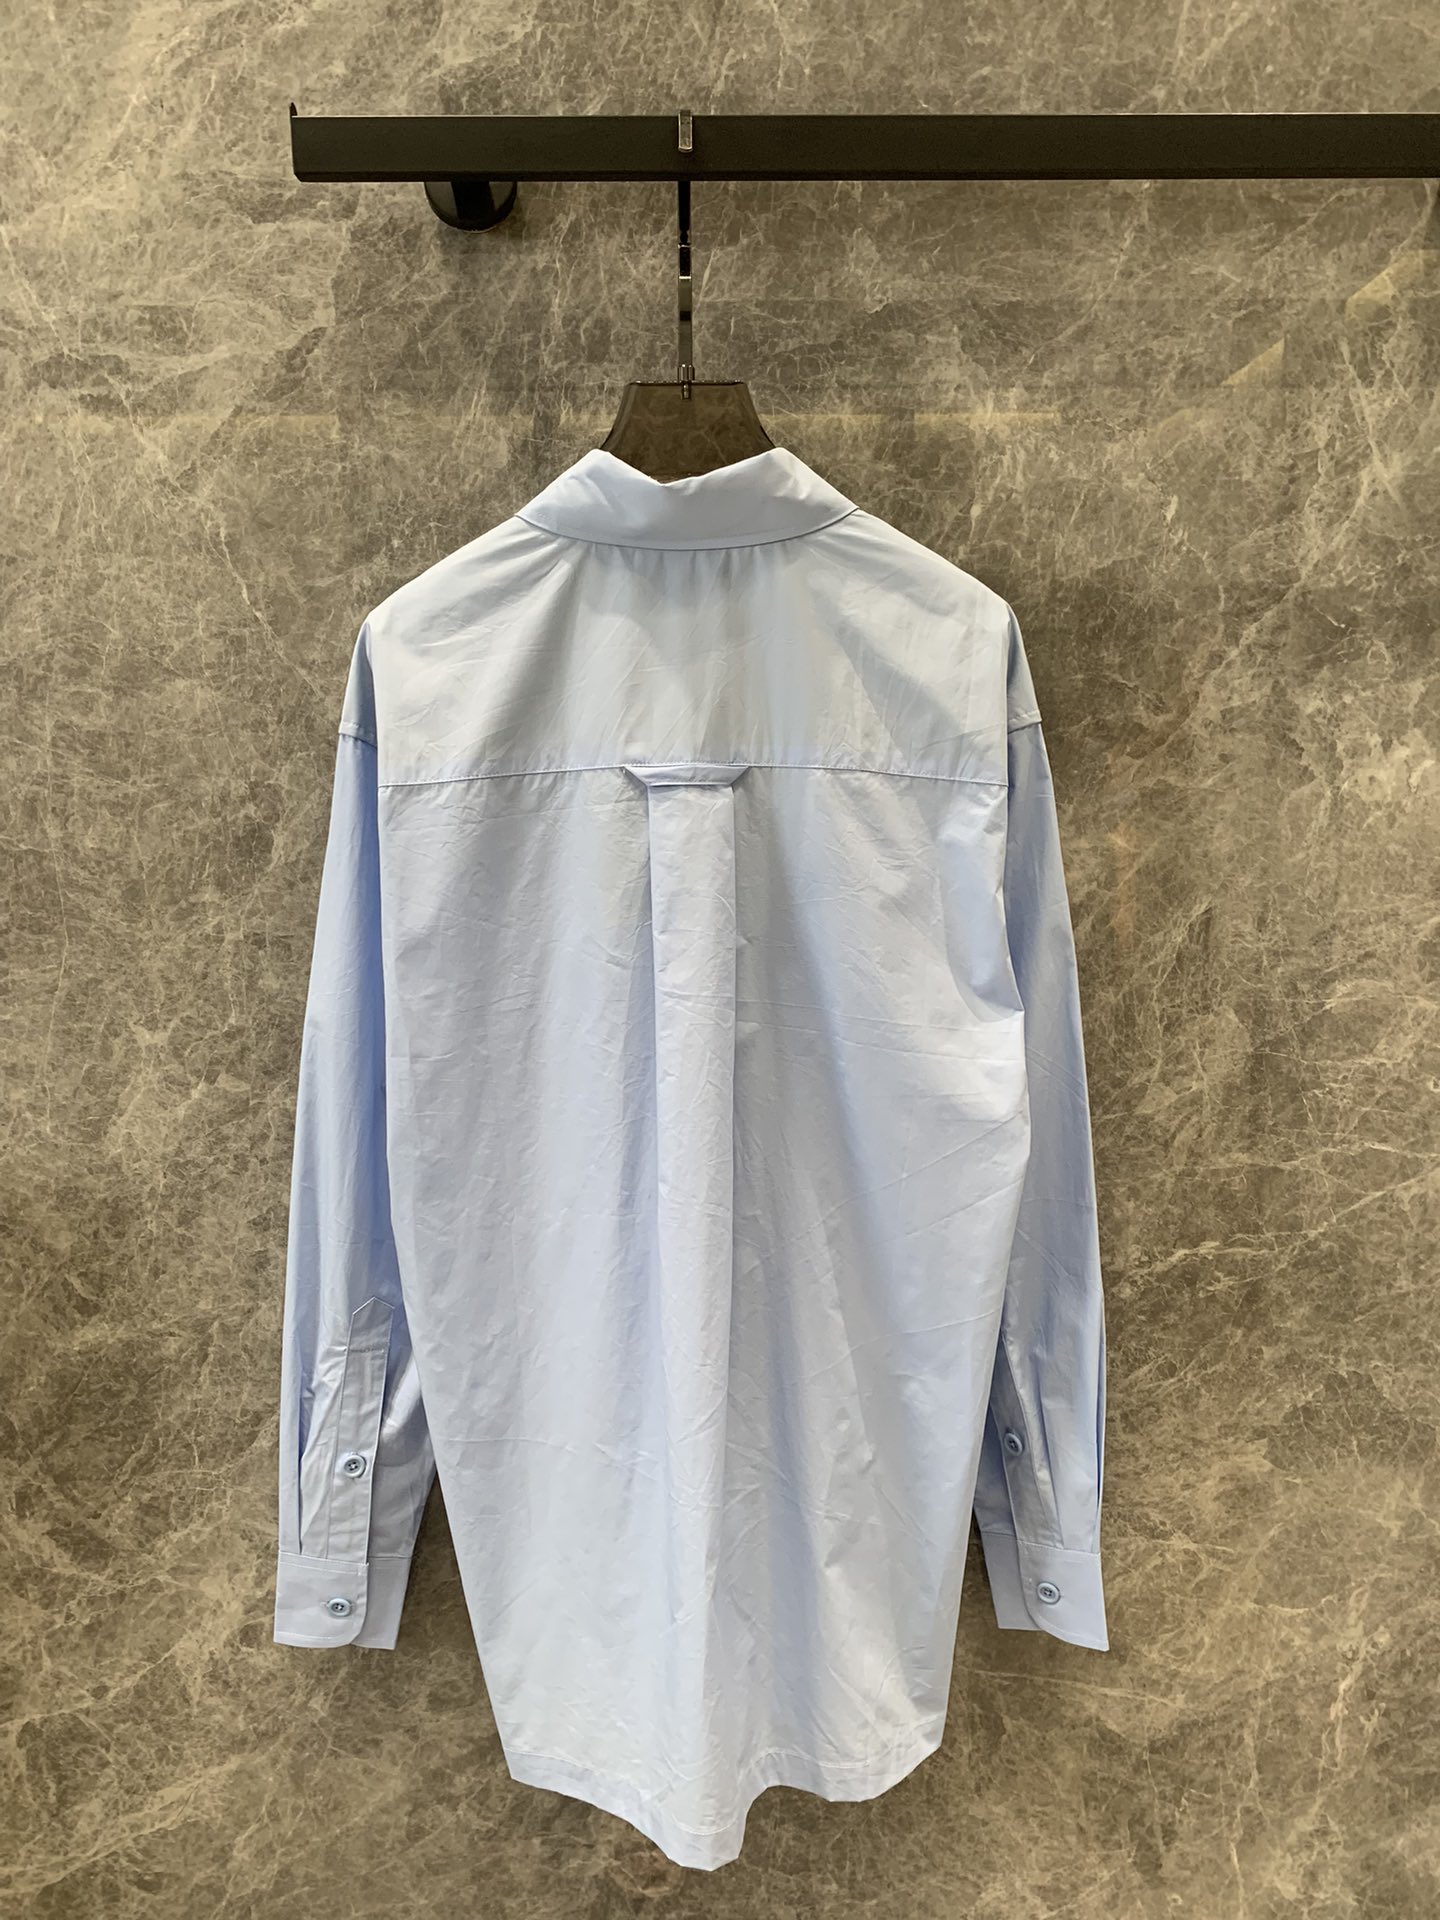 Gucc*24Ss夏季新款微标刺绣翻领长袖衬衫采用定制棉质面料柔和米色与活力色调融为一体迎接新一季的到来